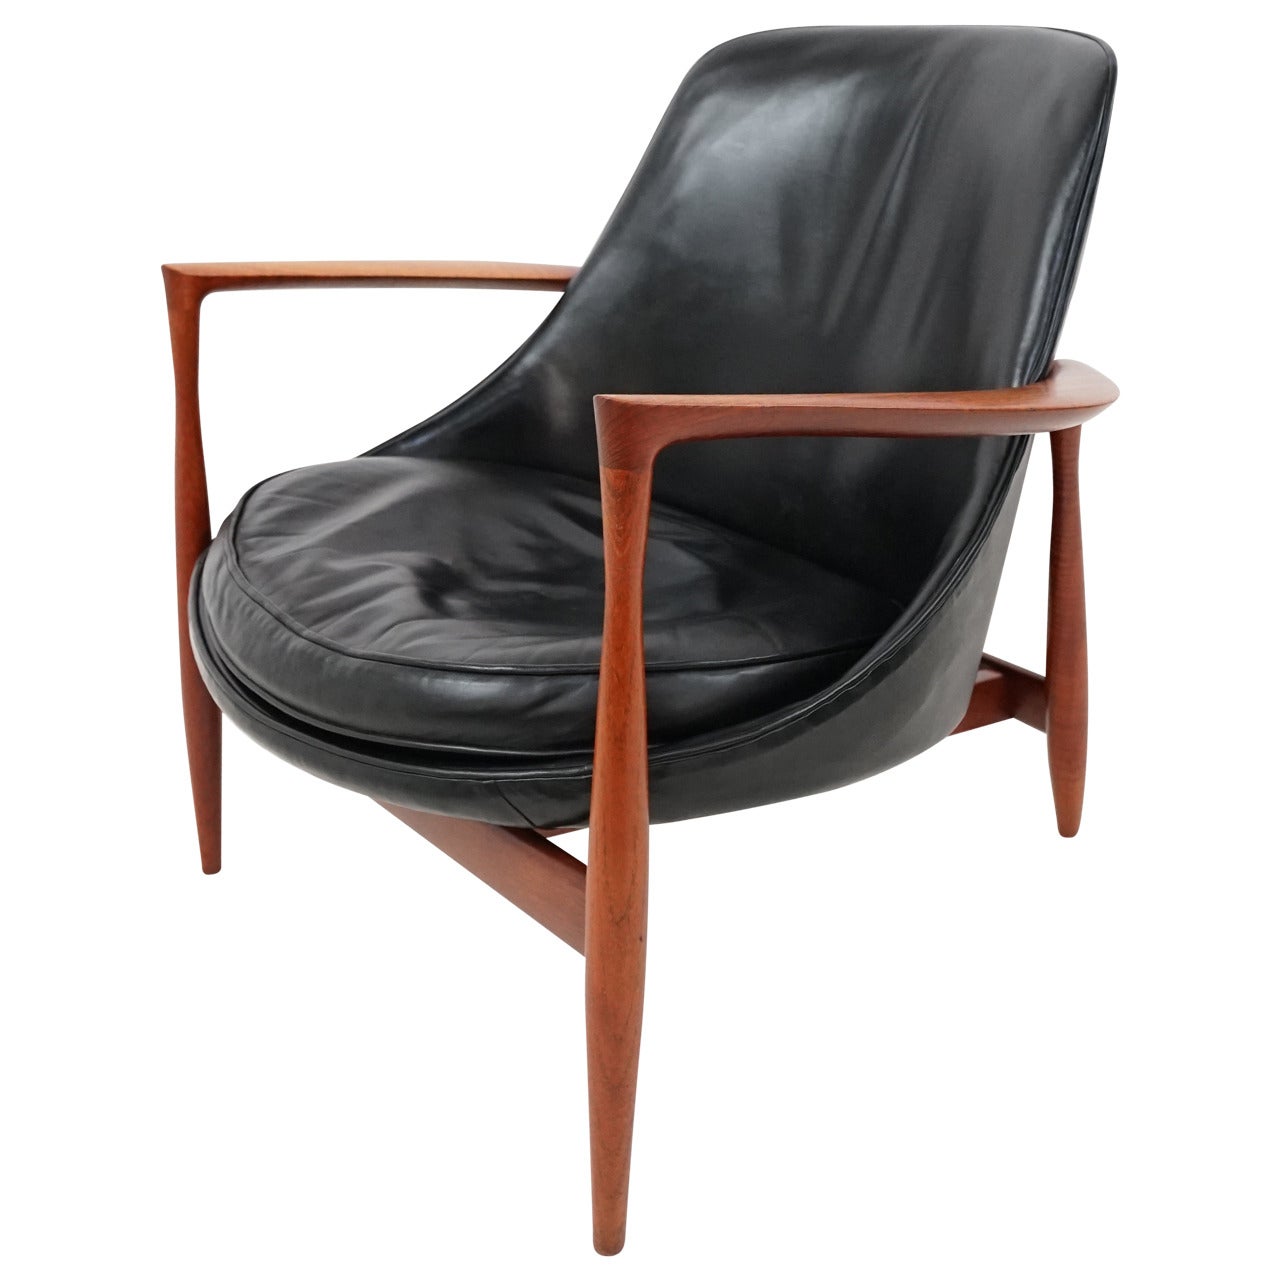 Rare Original Teak and Leather Elizabeth Chair by Ib Kofod-Larsen For Sale